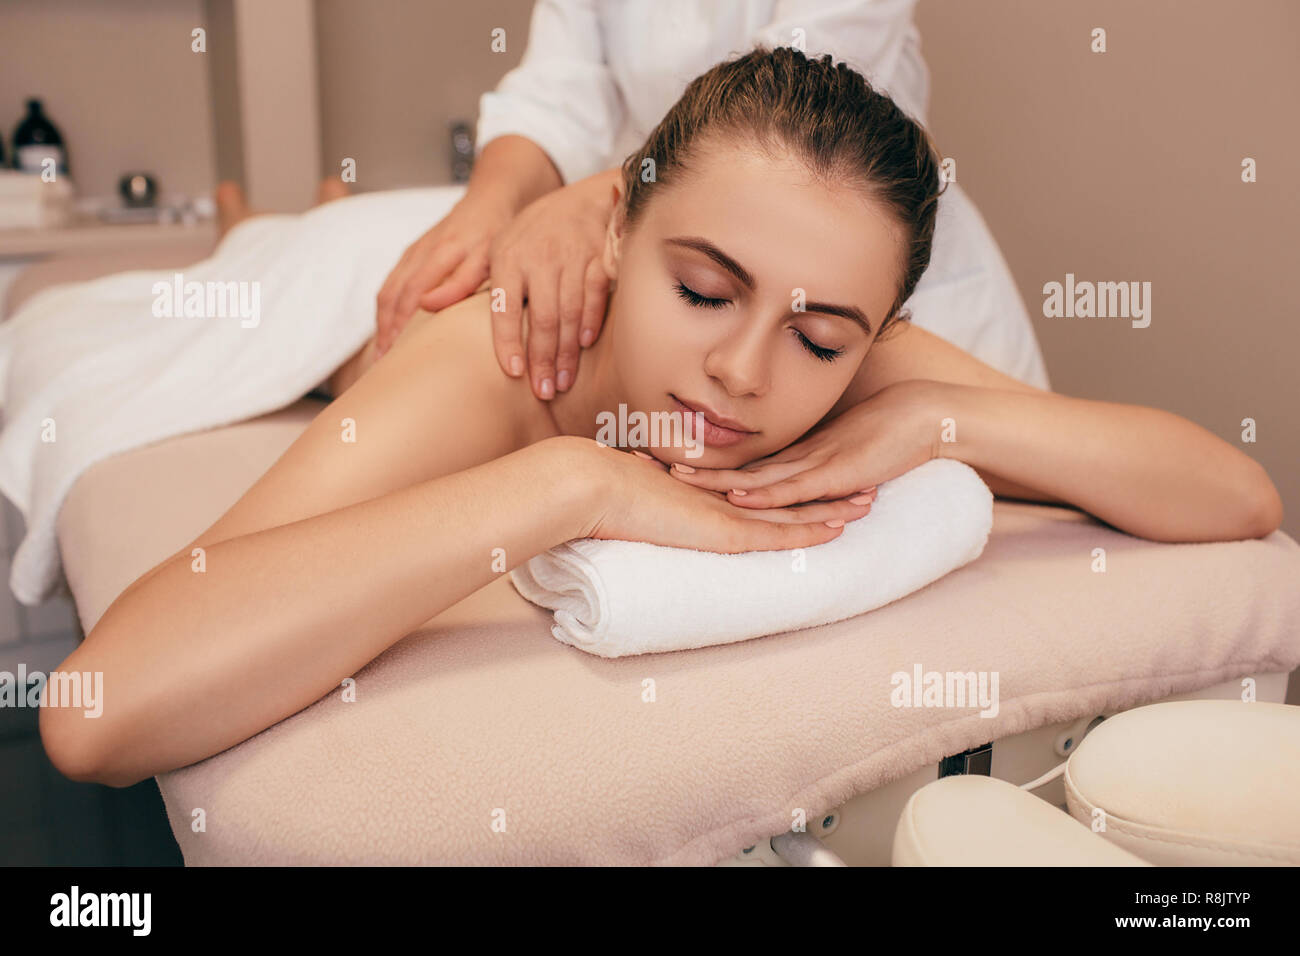 young woman having a professional massagel at beauty salon Stock Photo